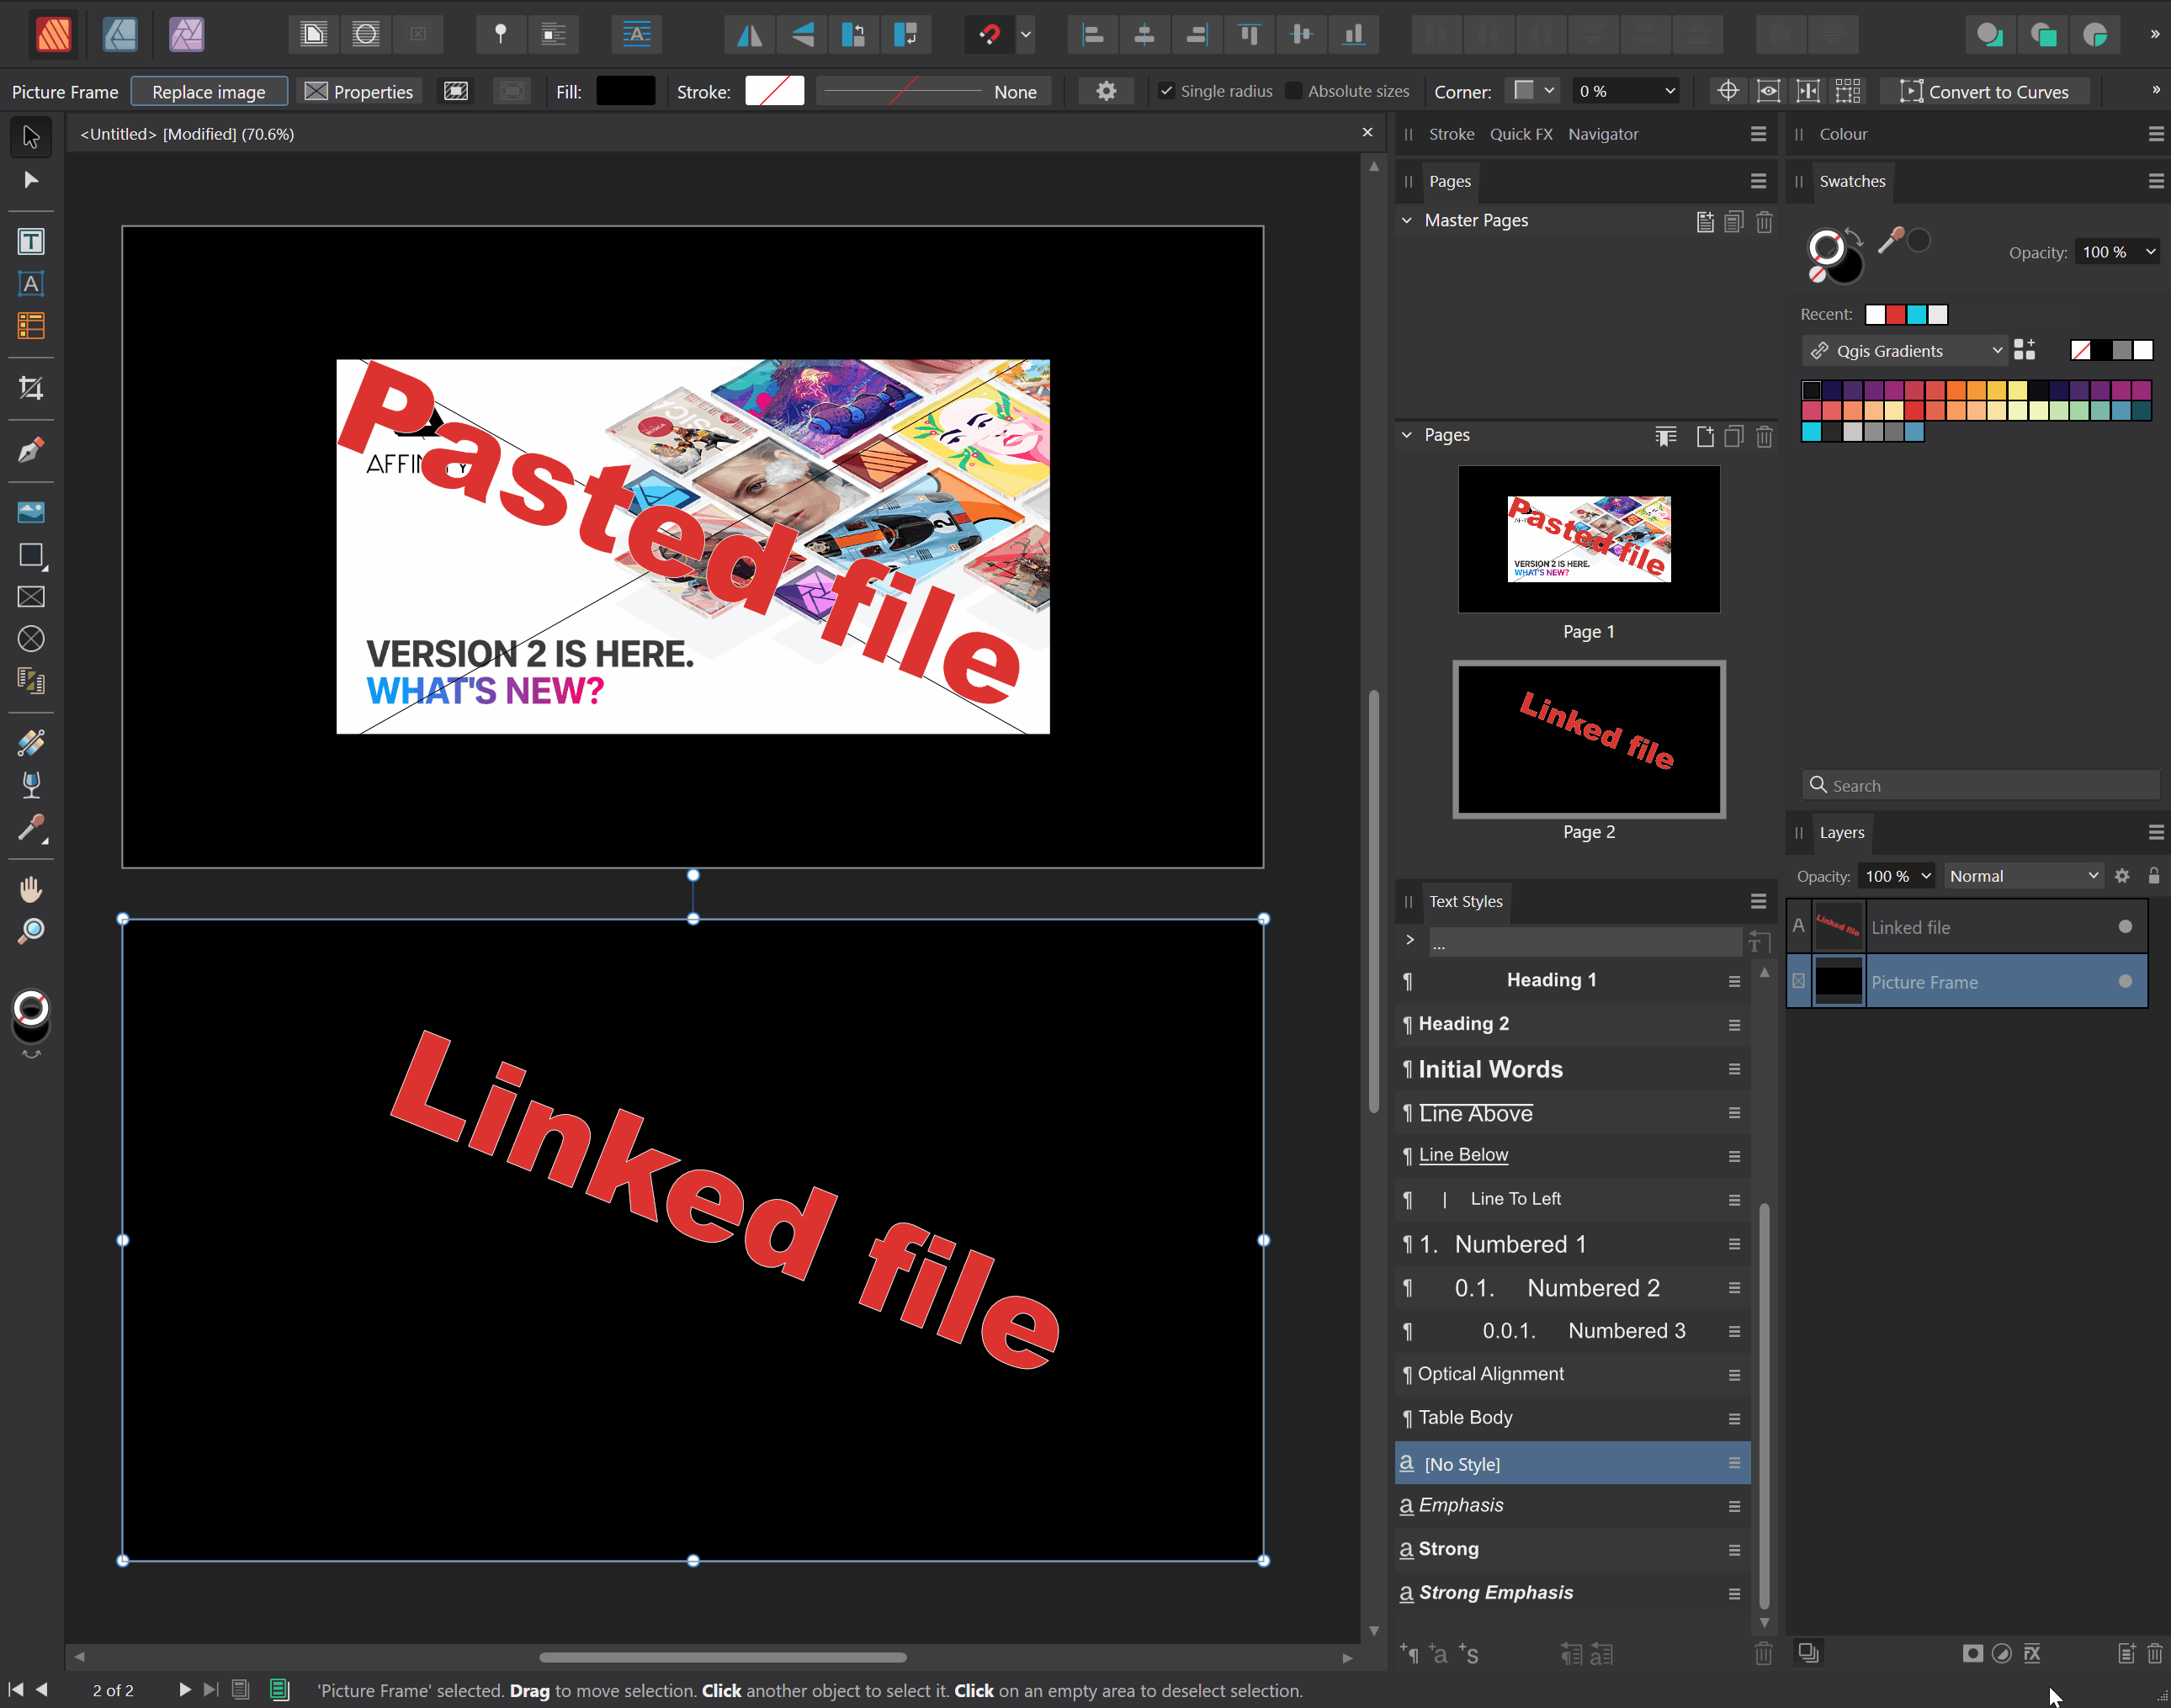 CLICK LINK IN DESCRIPTION on Make a GIF